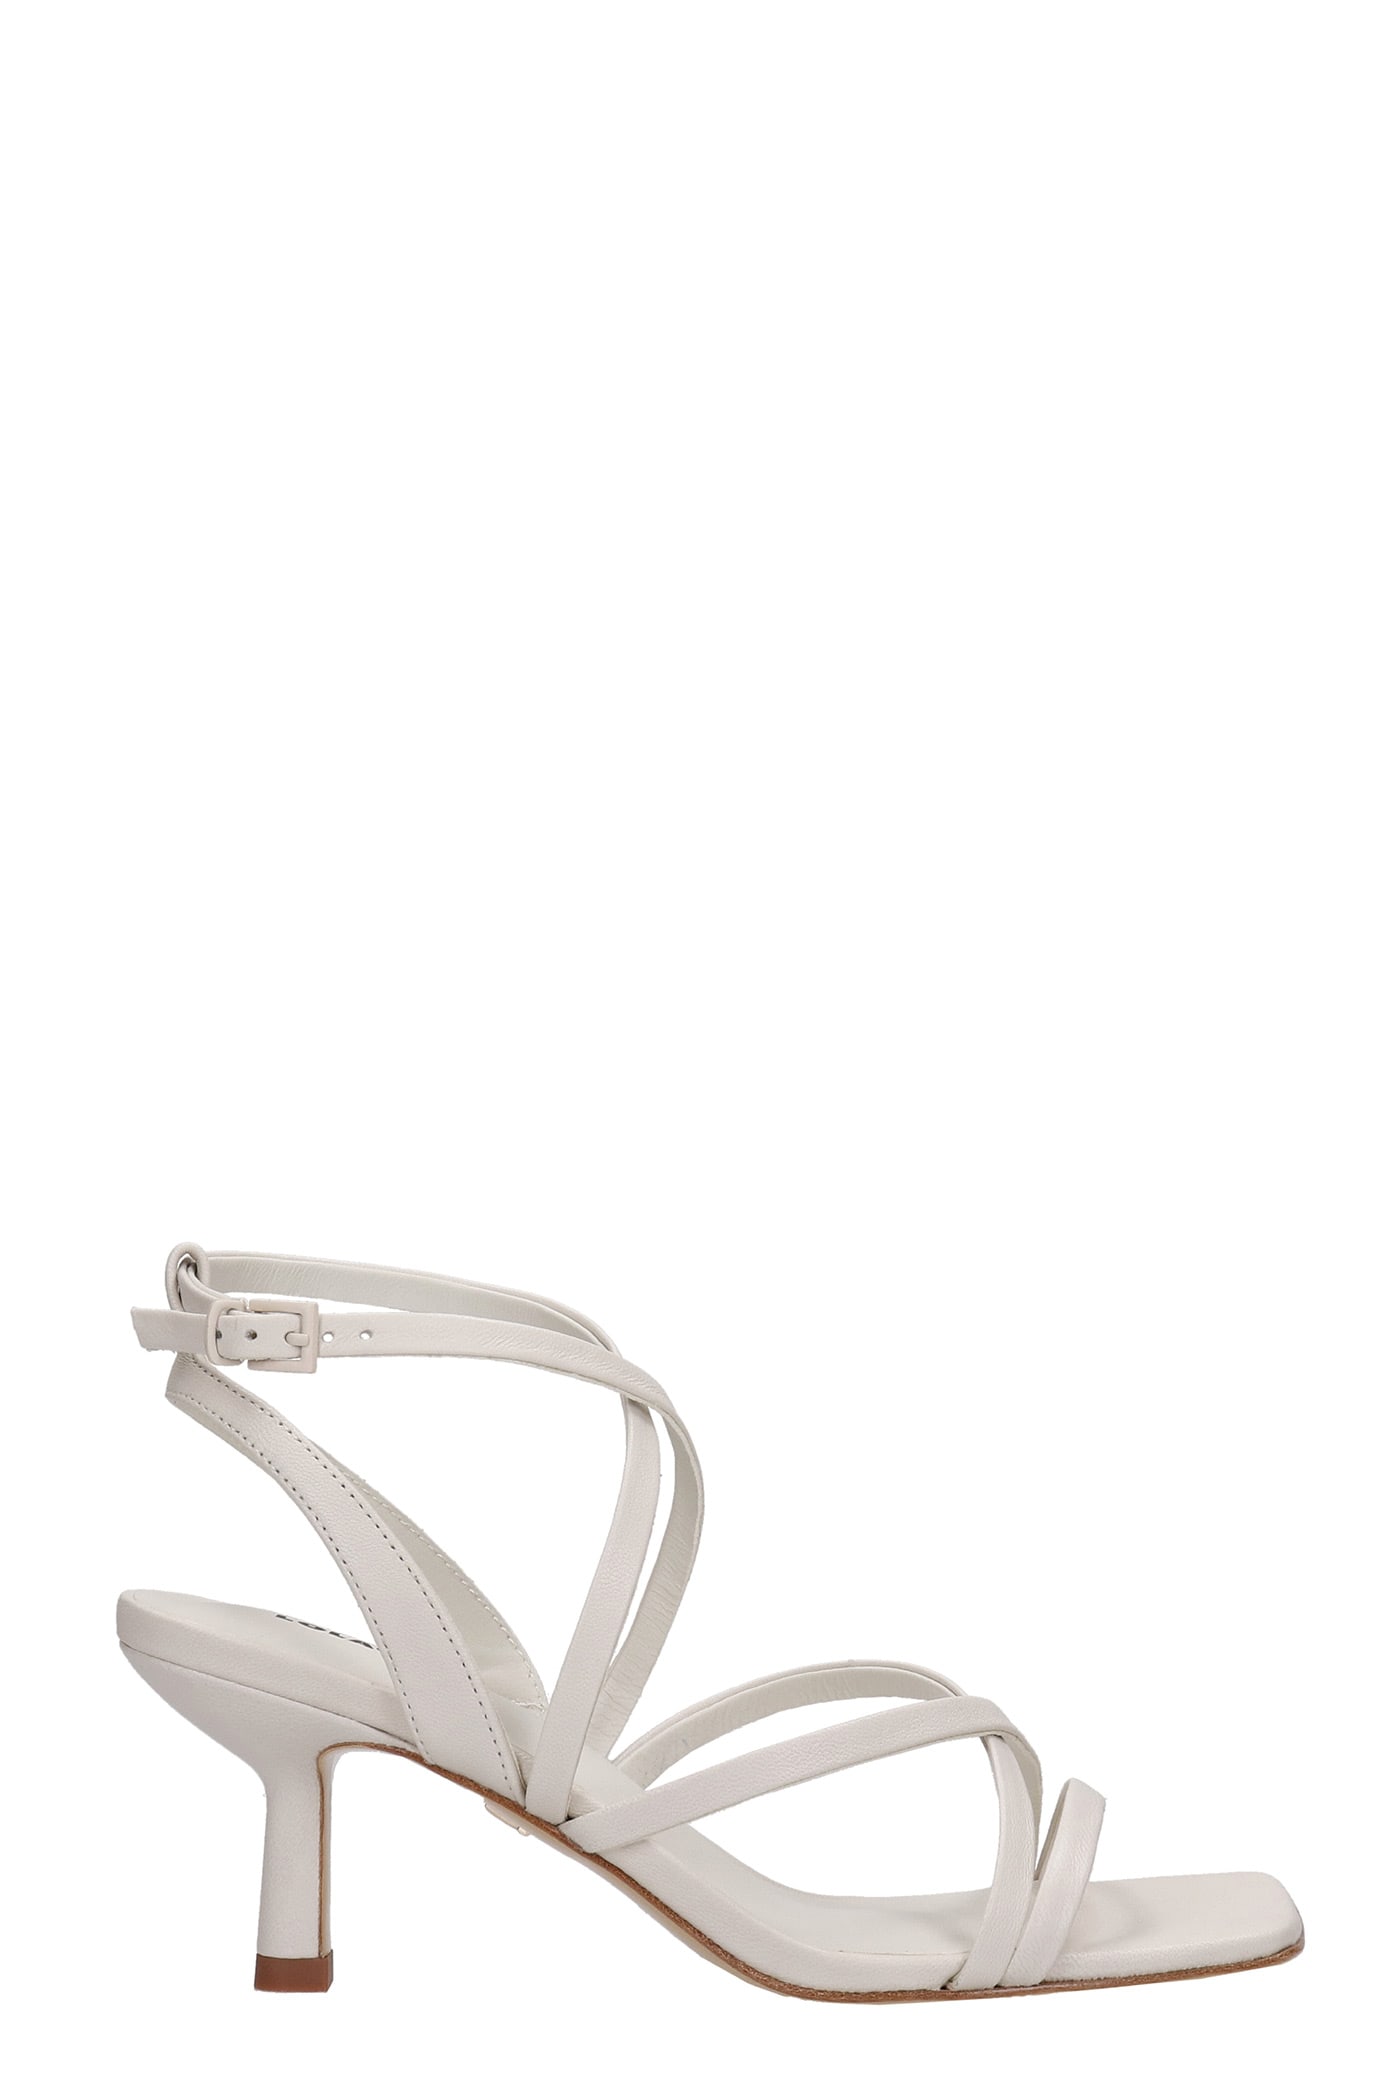 lola cruz sandals in white leather